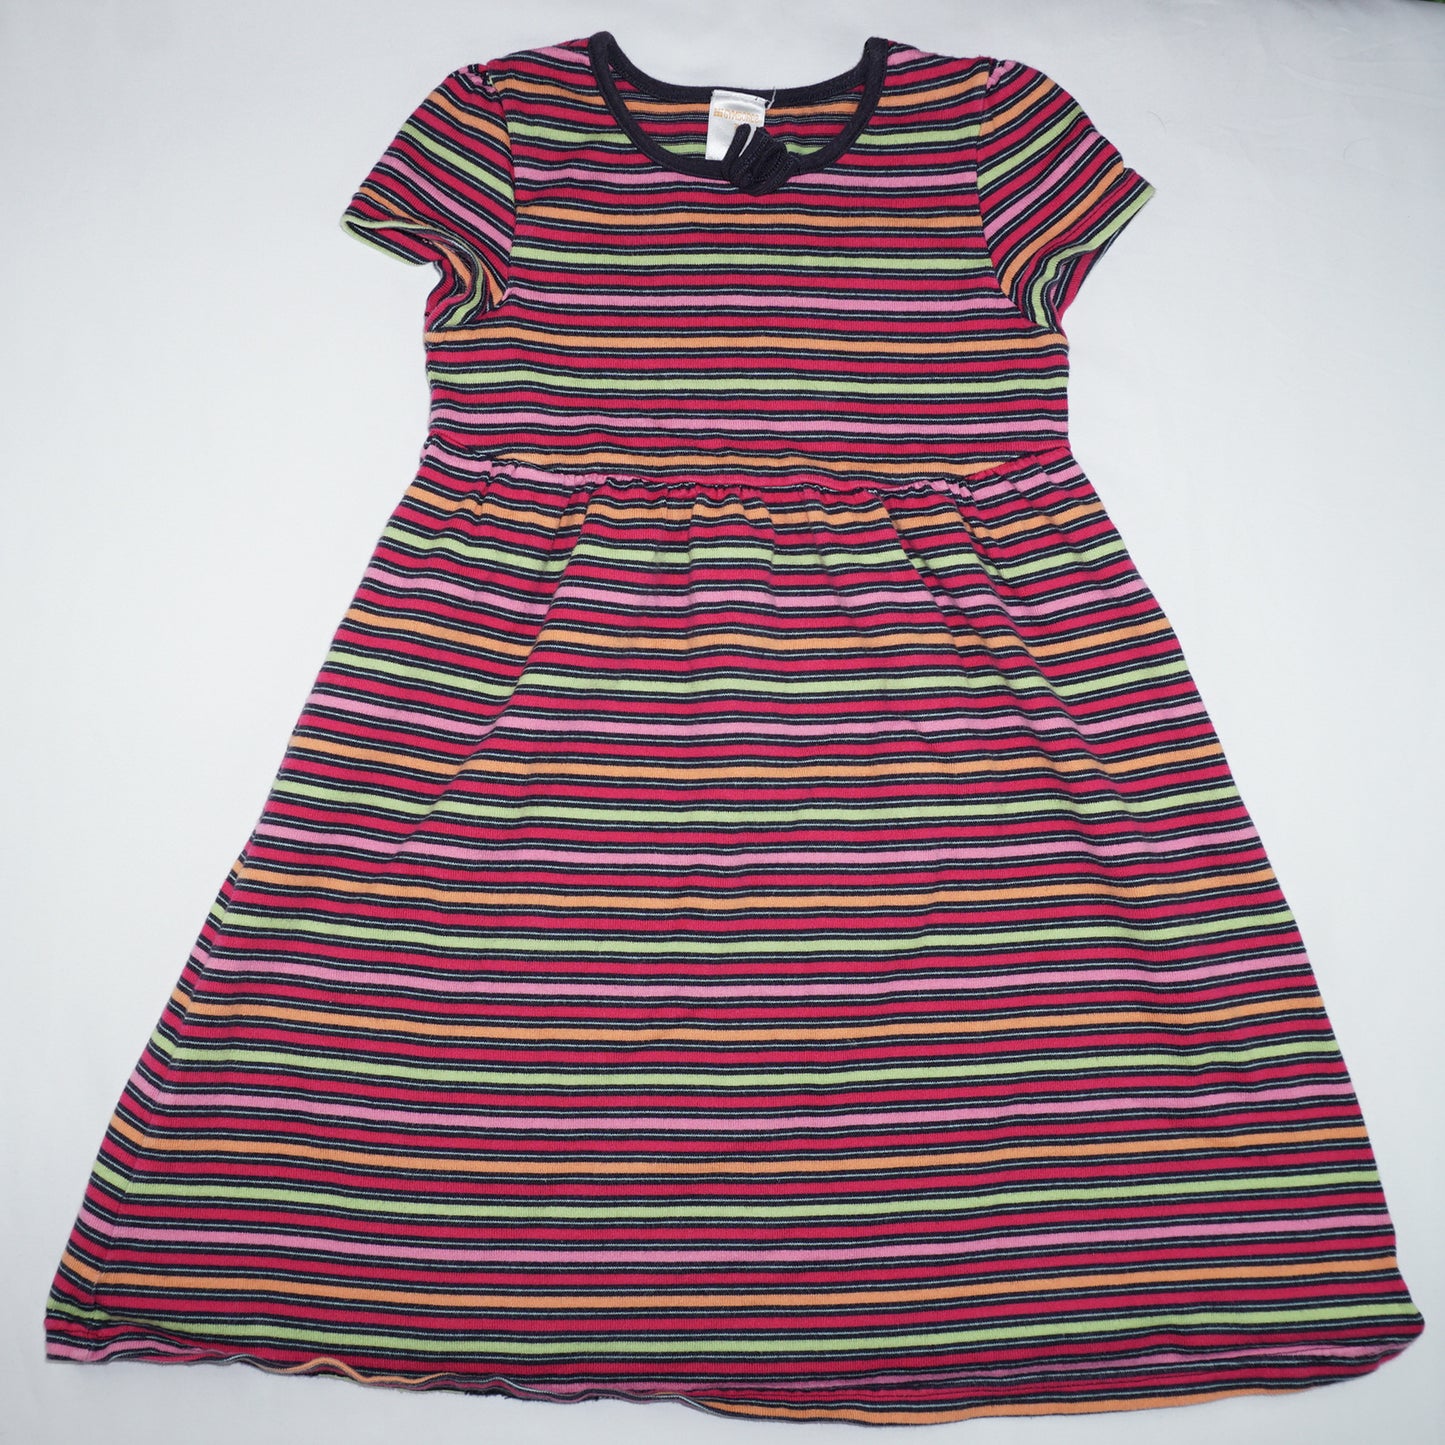 Striped Dress Size 7